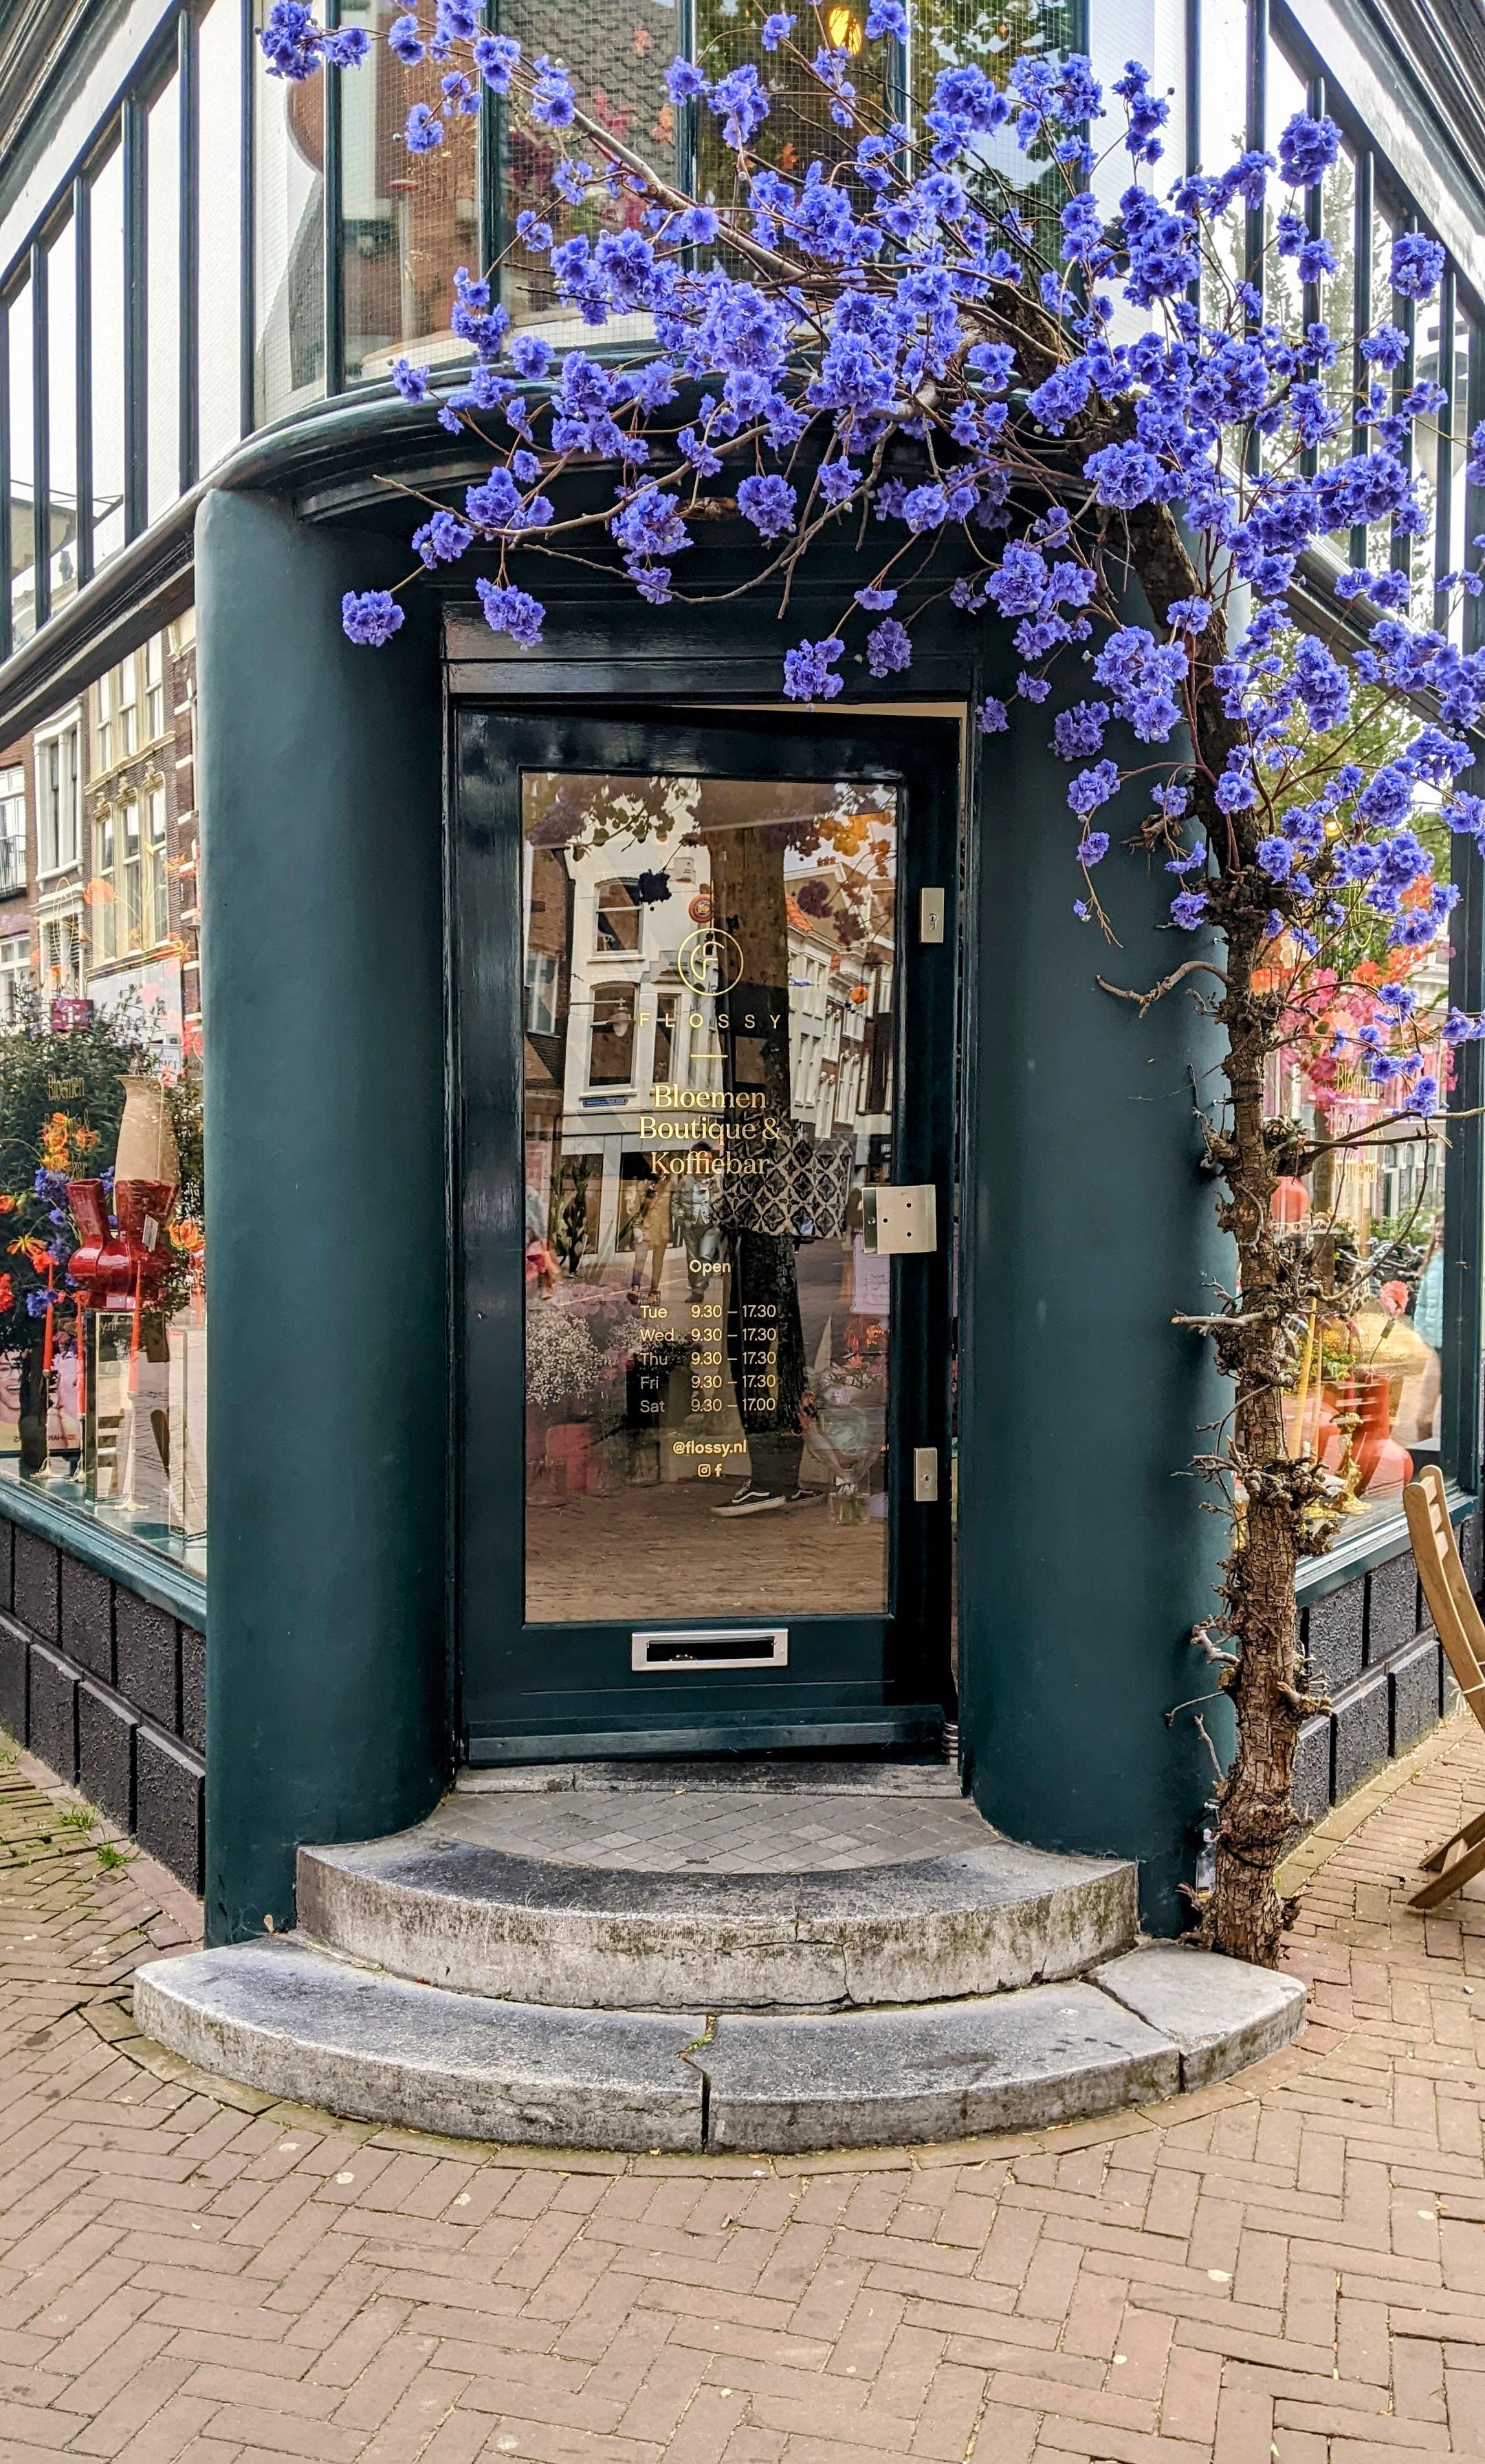 Come in...
#flowers #beautifuldoor #gouda #holland